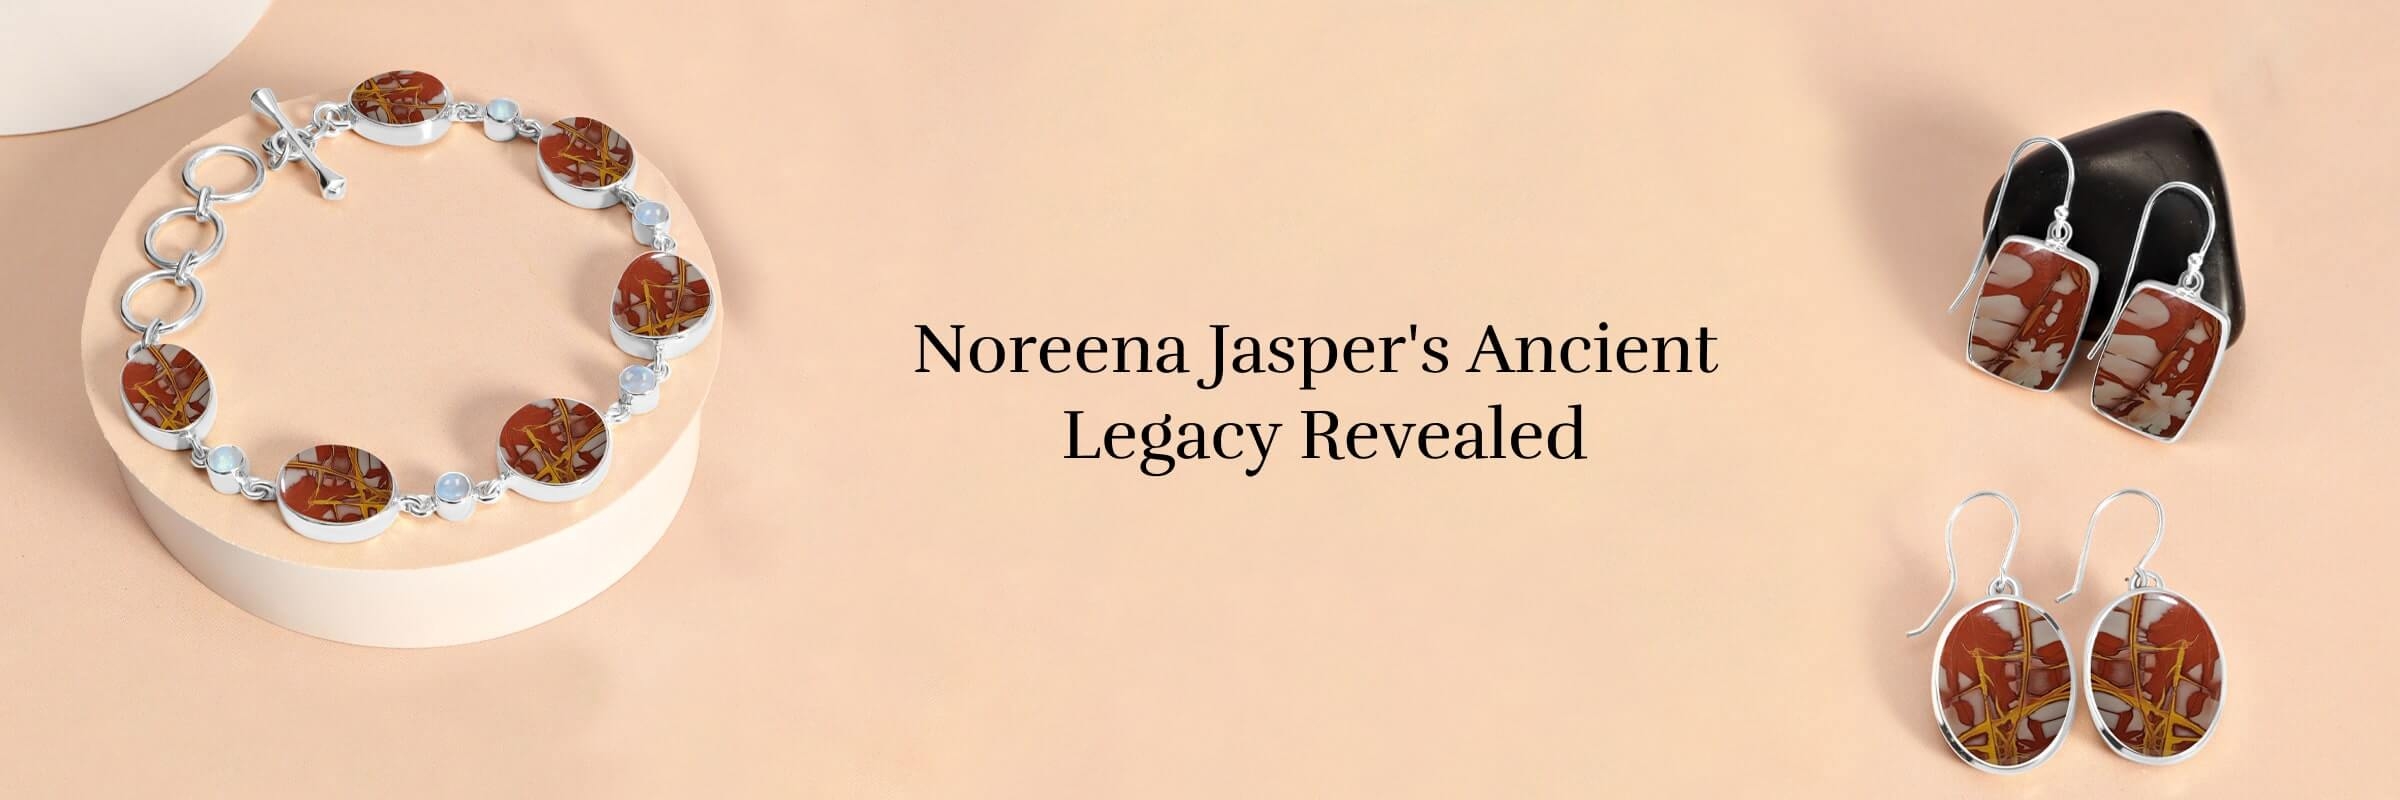 History of Noreena Jasper Stone